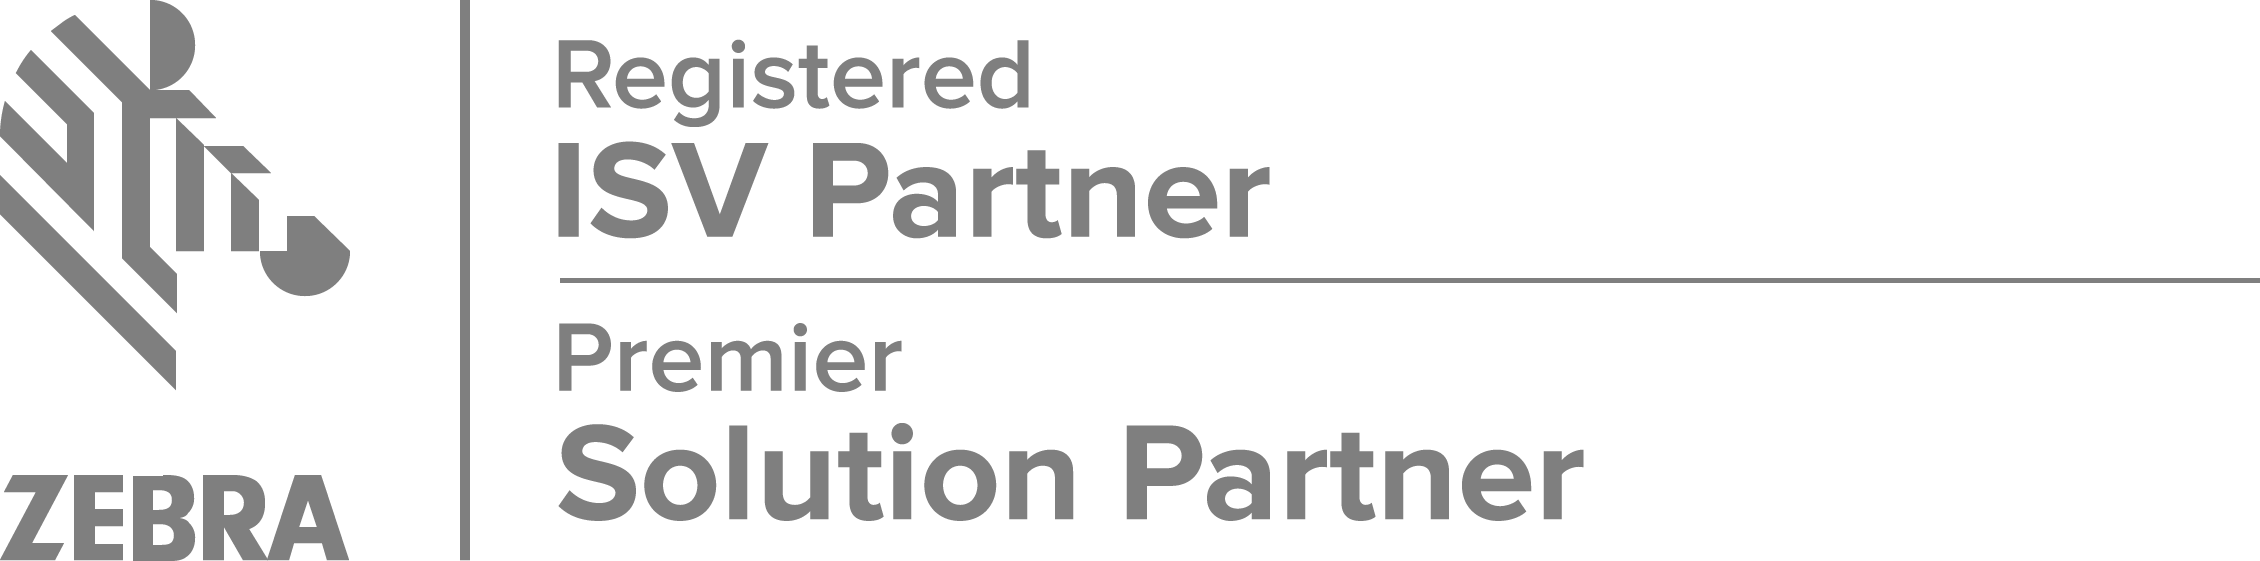 Zebra-Partner_Certificaciones-05